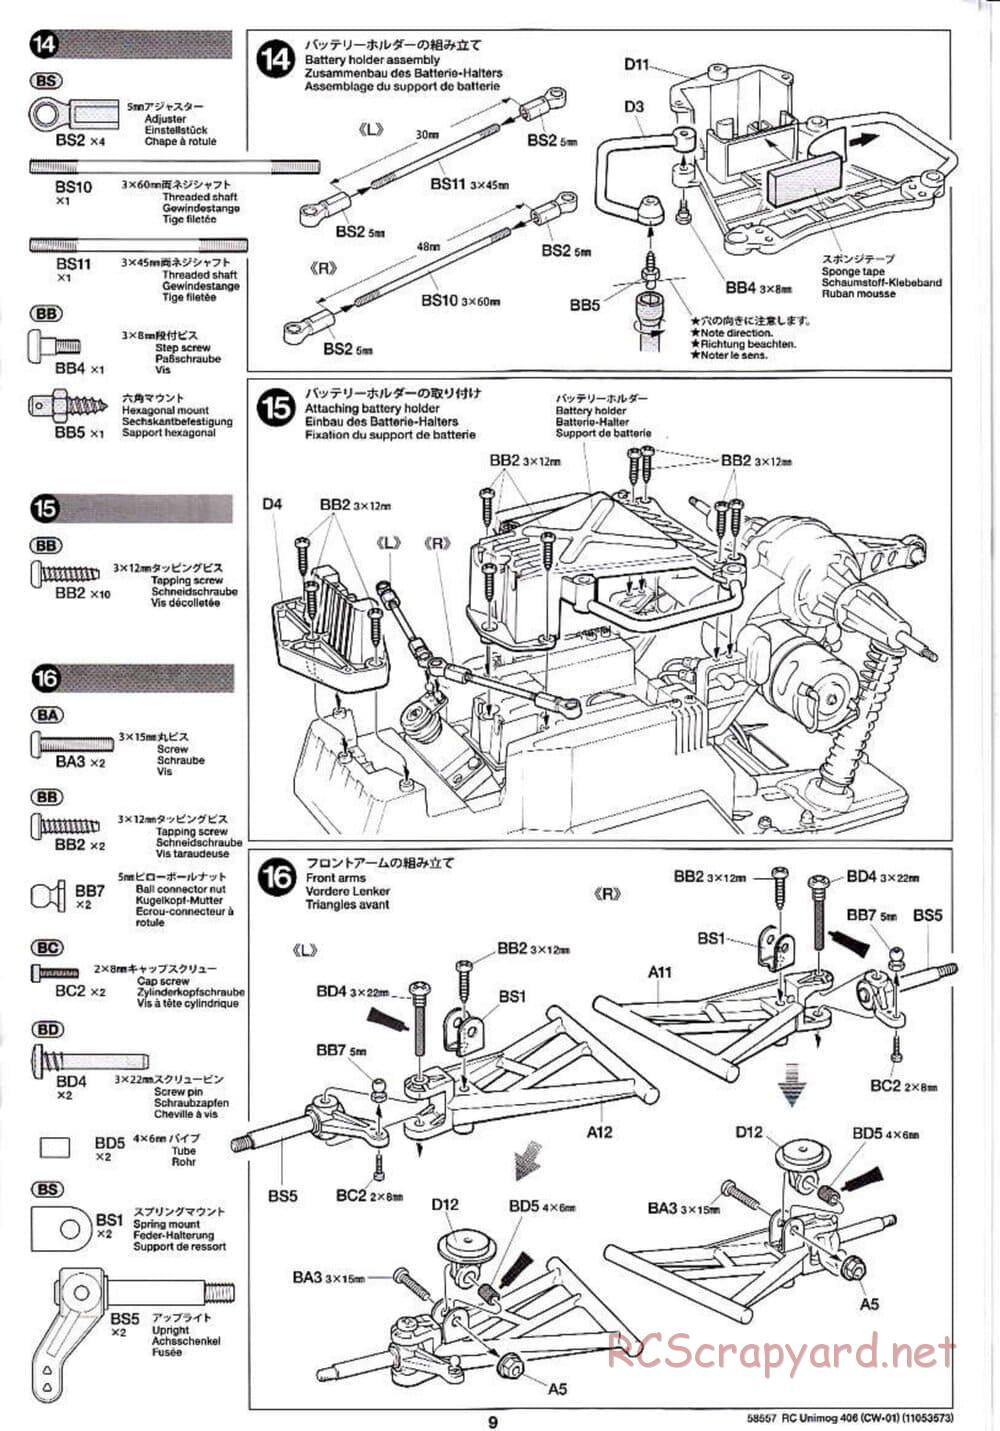 Tamiya - Mercedes-Benz Unimog 406 Series U900 - CW-01 Chassis - Manual - Page 9